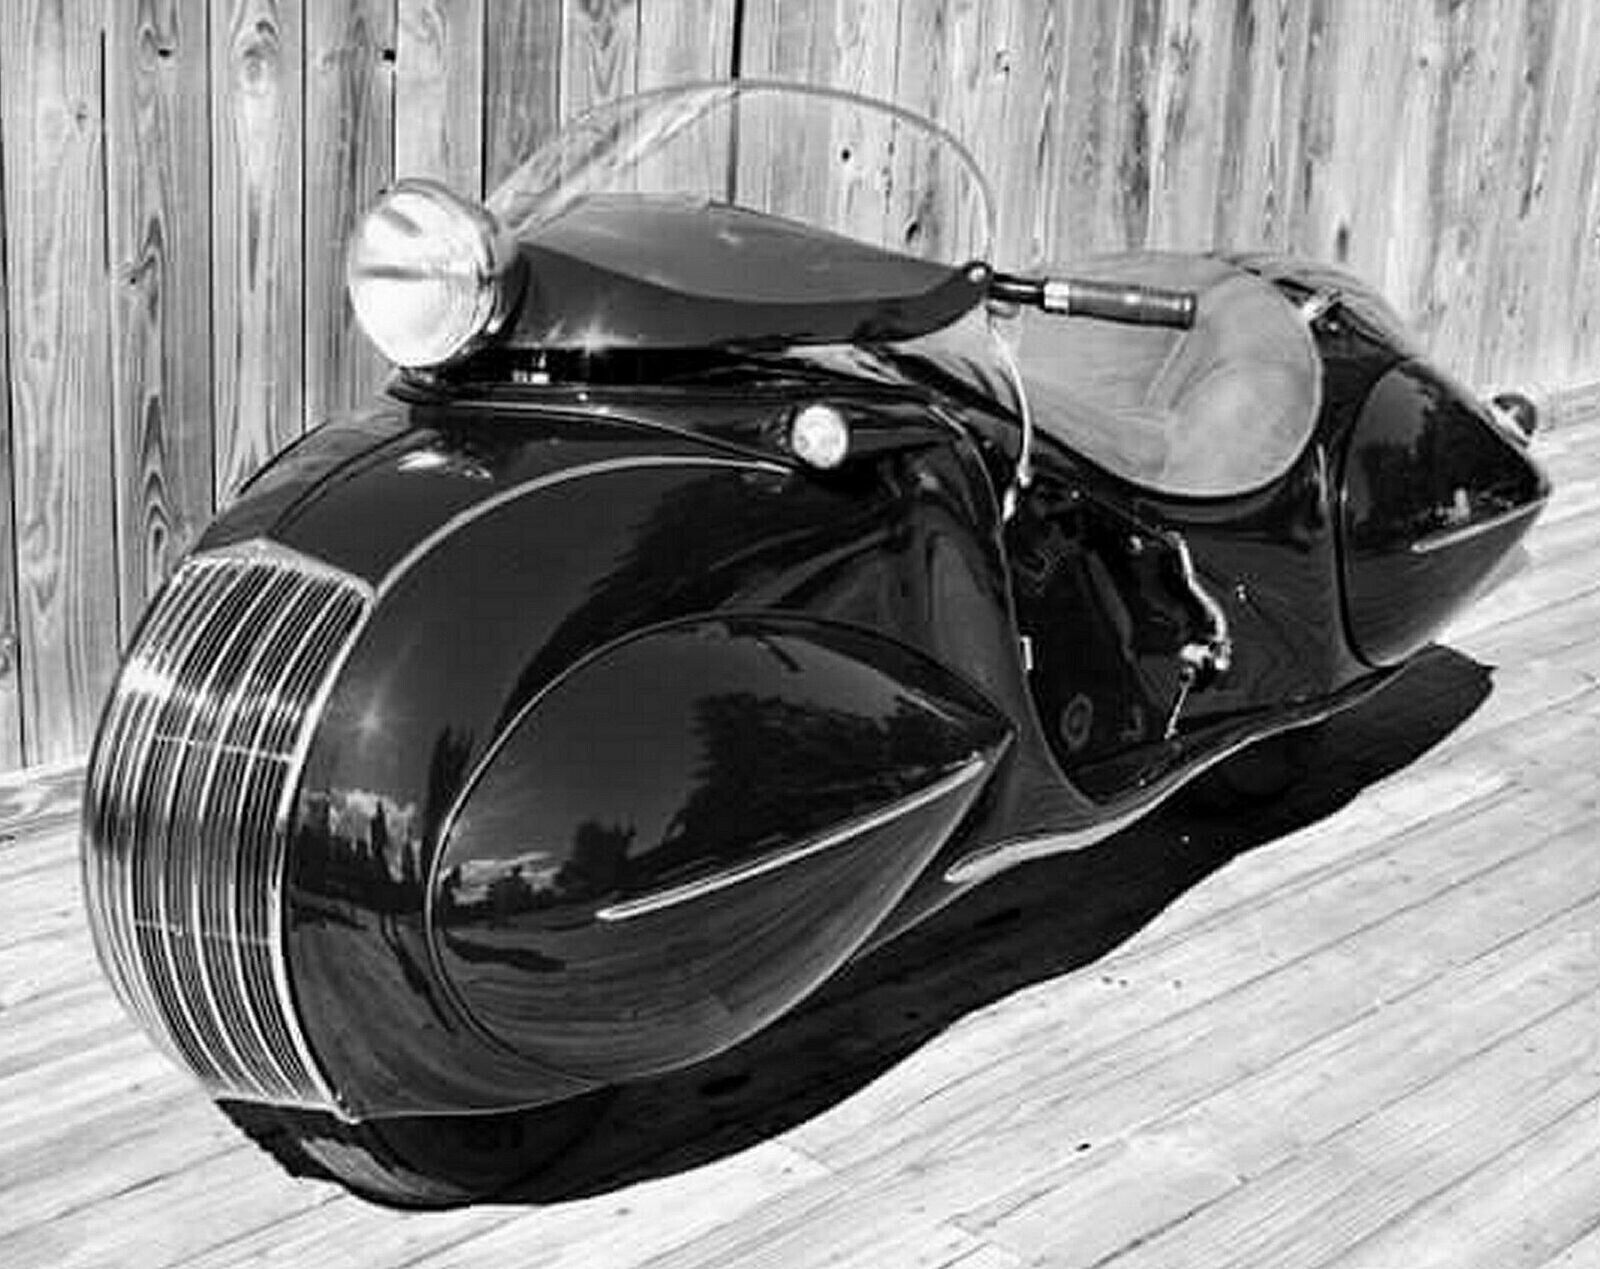 1936 HENDERSON Art Deco MOTORCYCLE Concept Bike Picture Photo 8.5x11